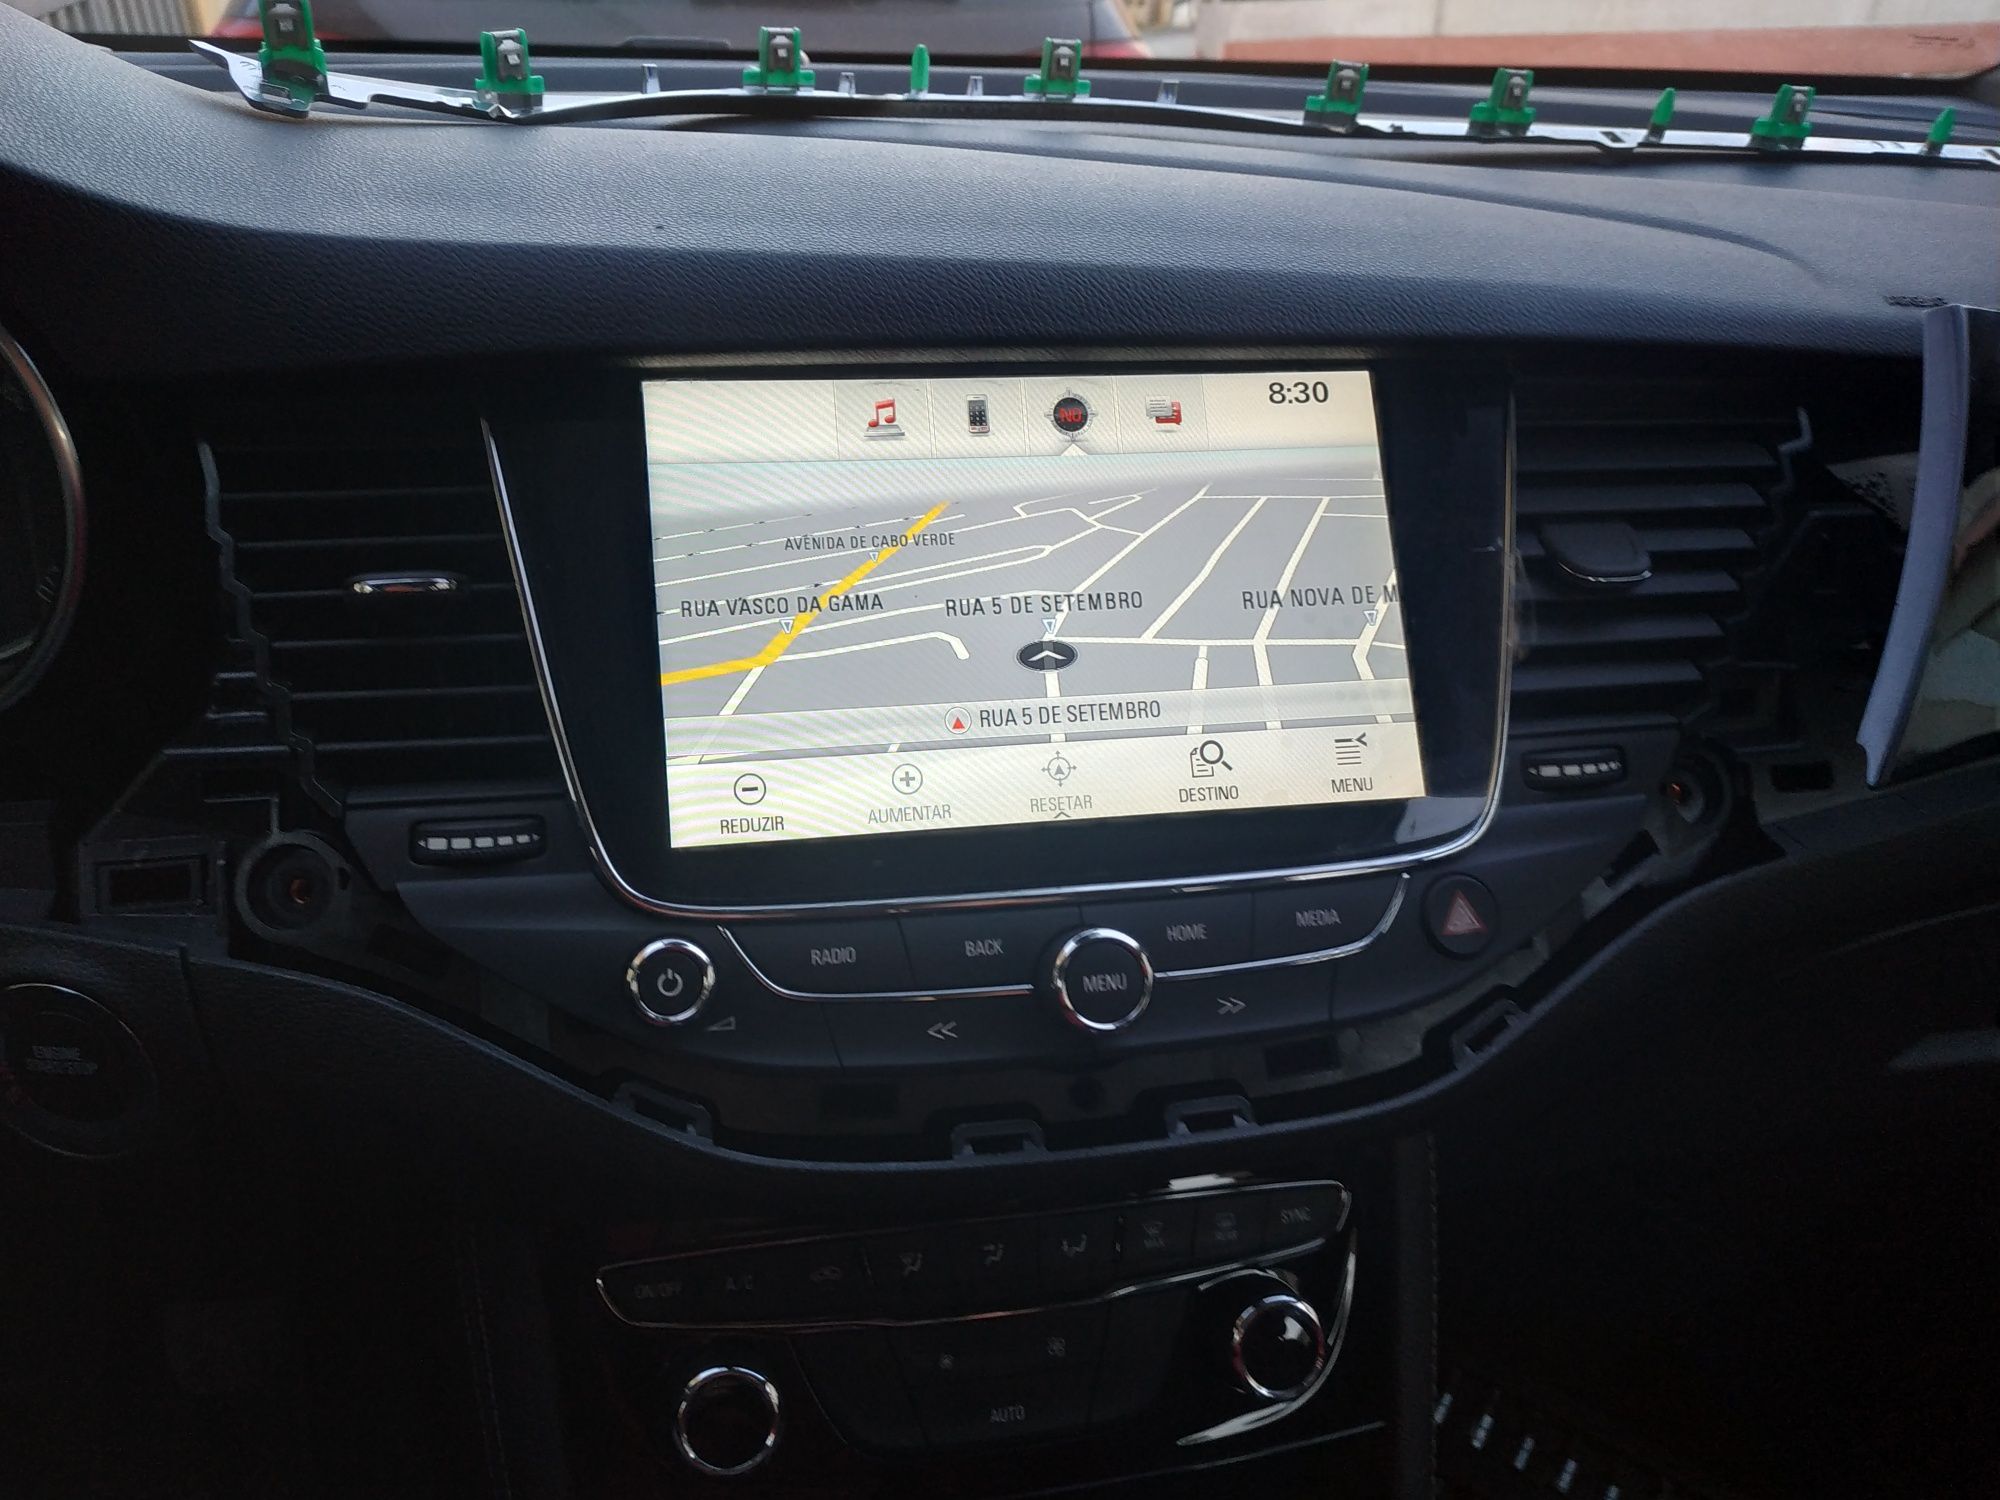 LCD, displays reparação Opel, Audi,Volkswagen, Peugeot, Niss